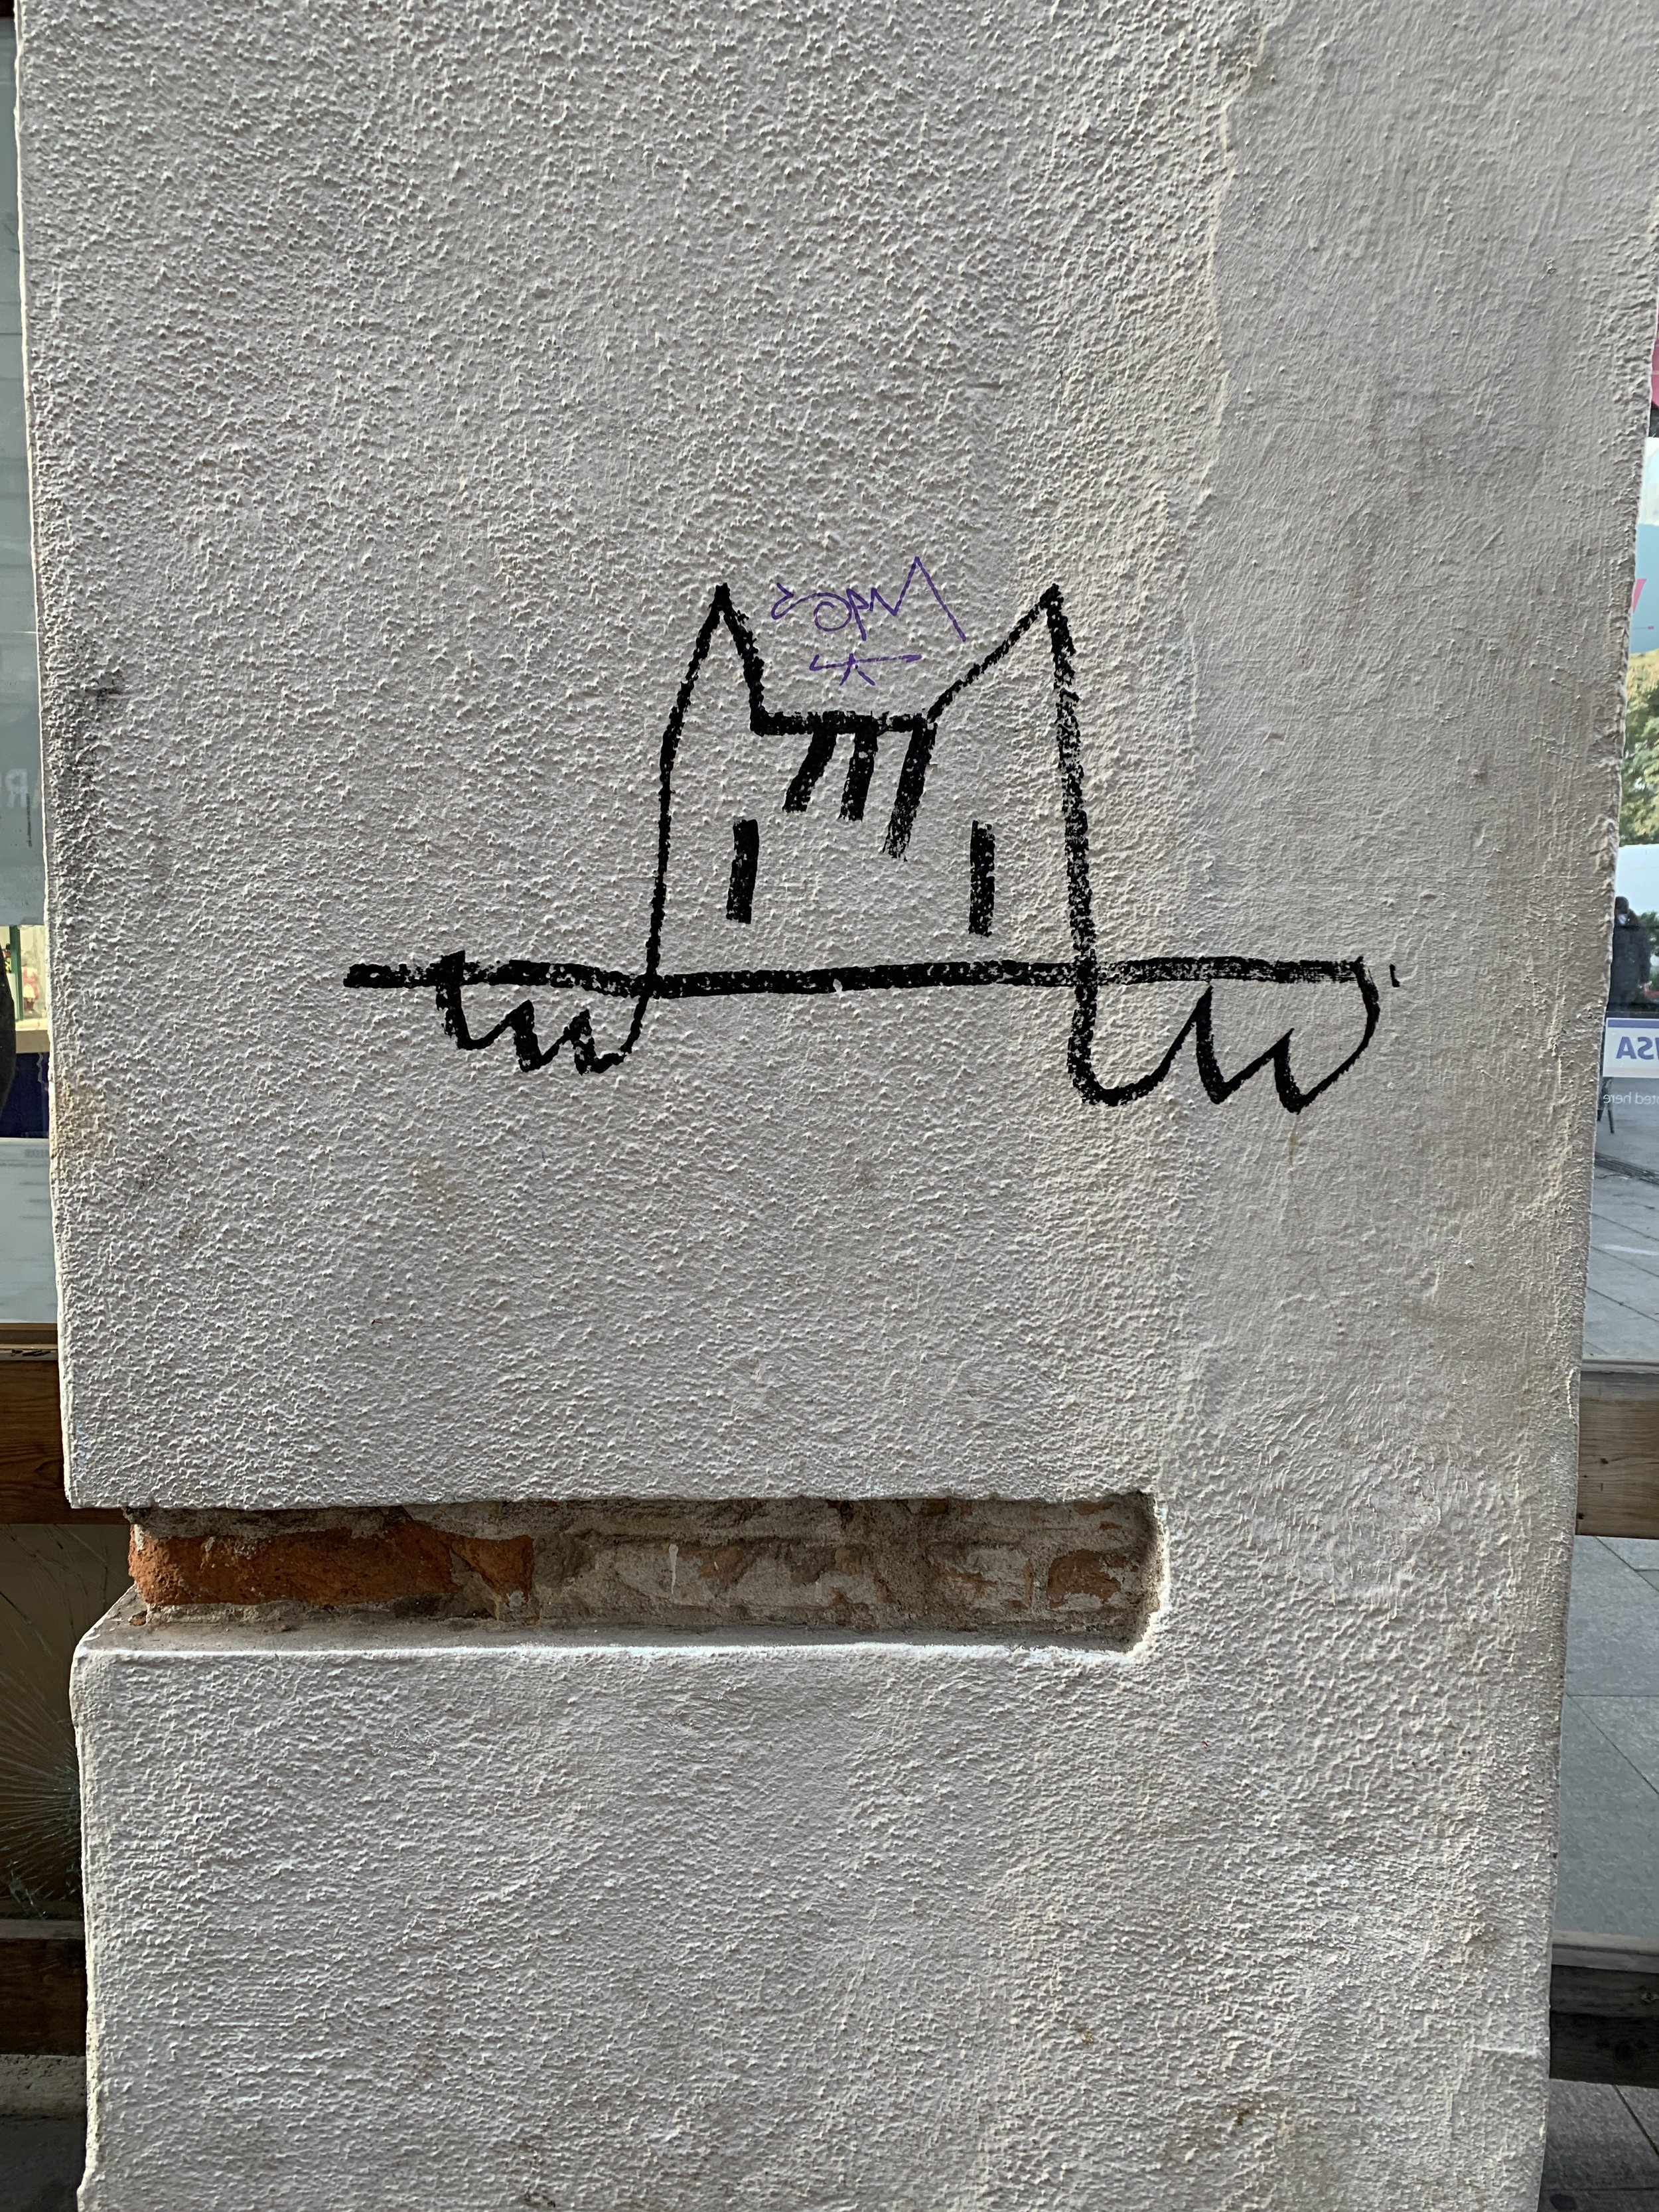 Cobi graffiti calle Barcelona